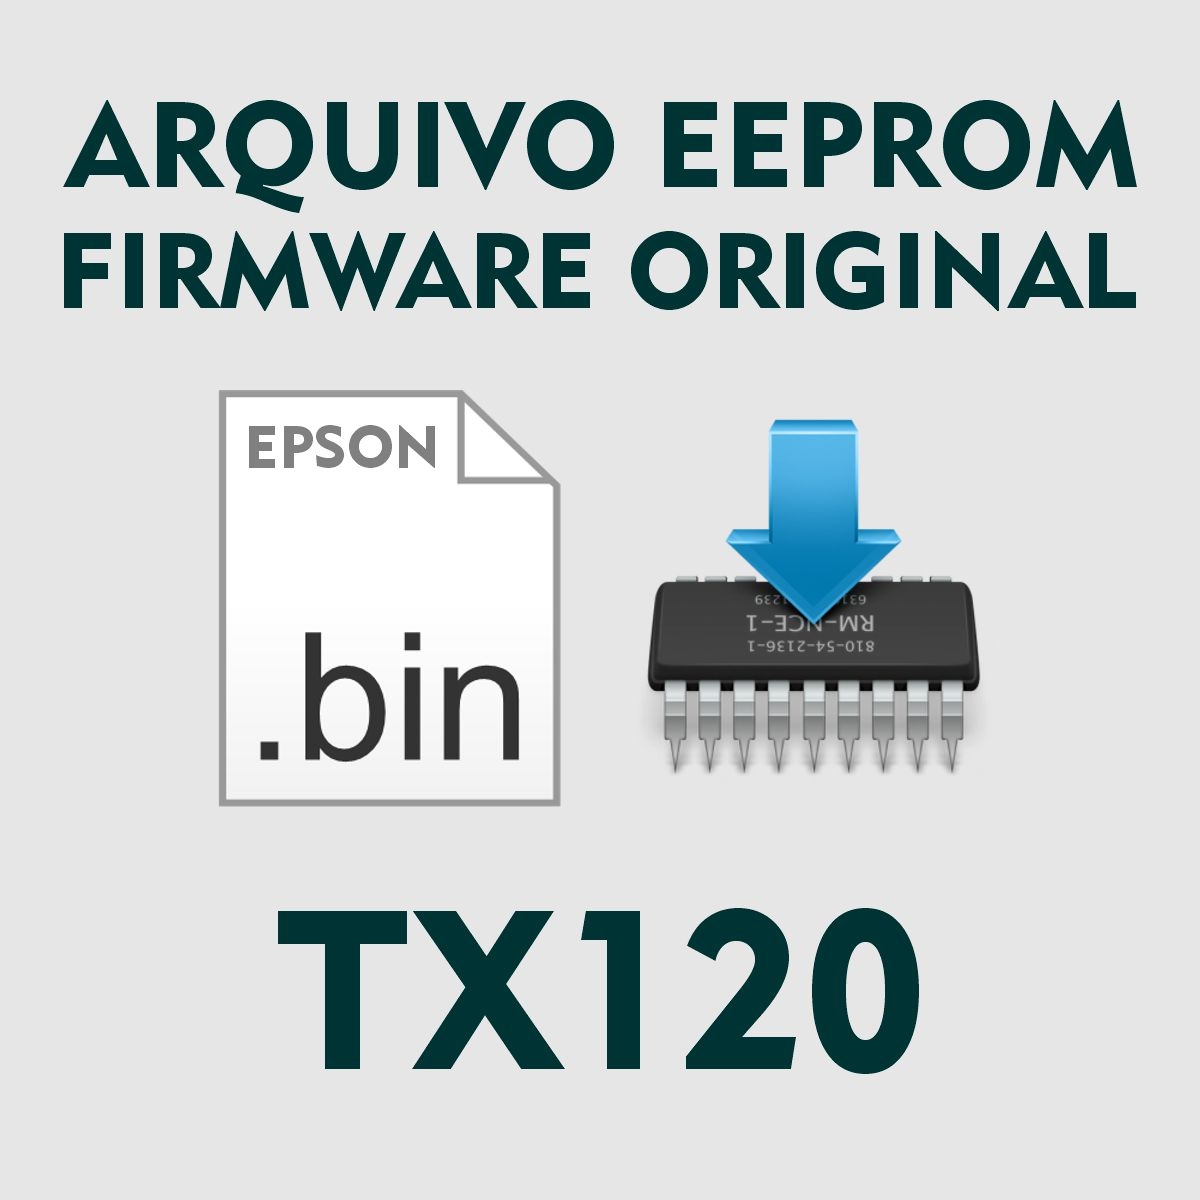 Epson TX120 | Arquivo de Eeprom Firmware .bin - Original